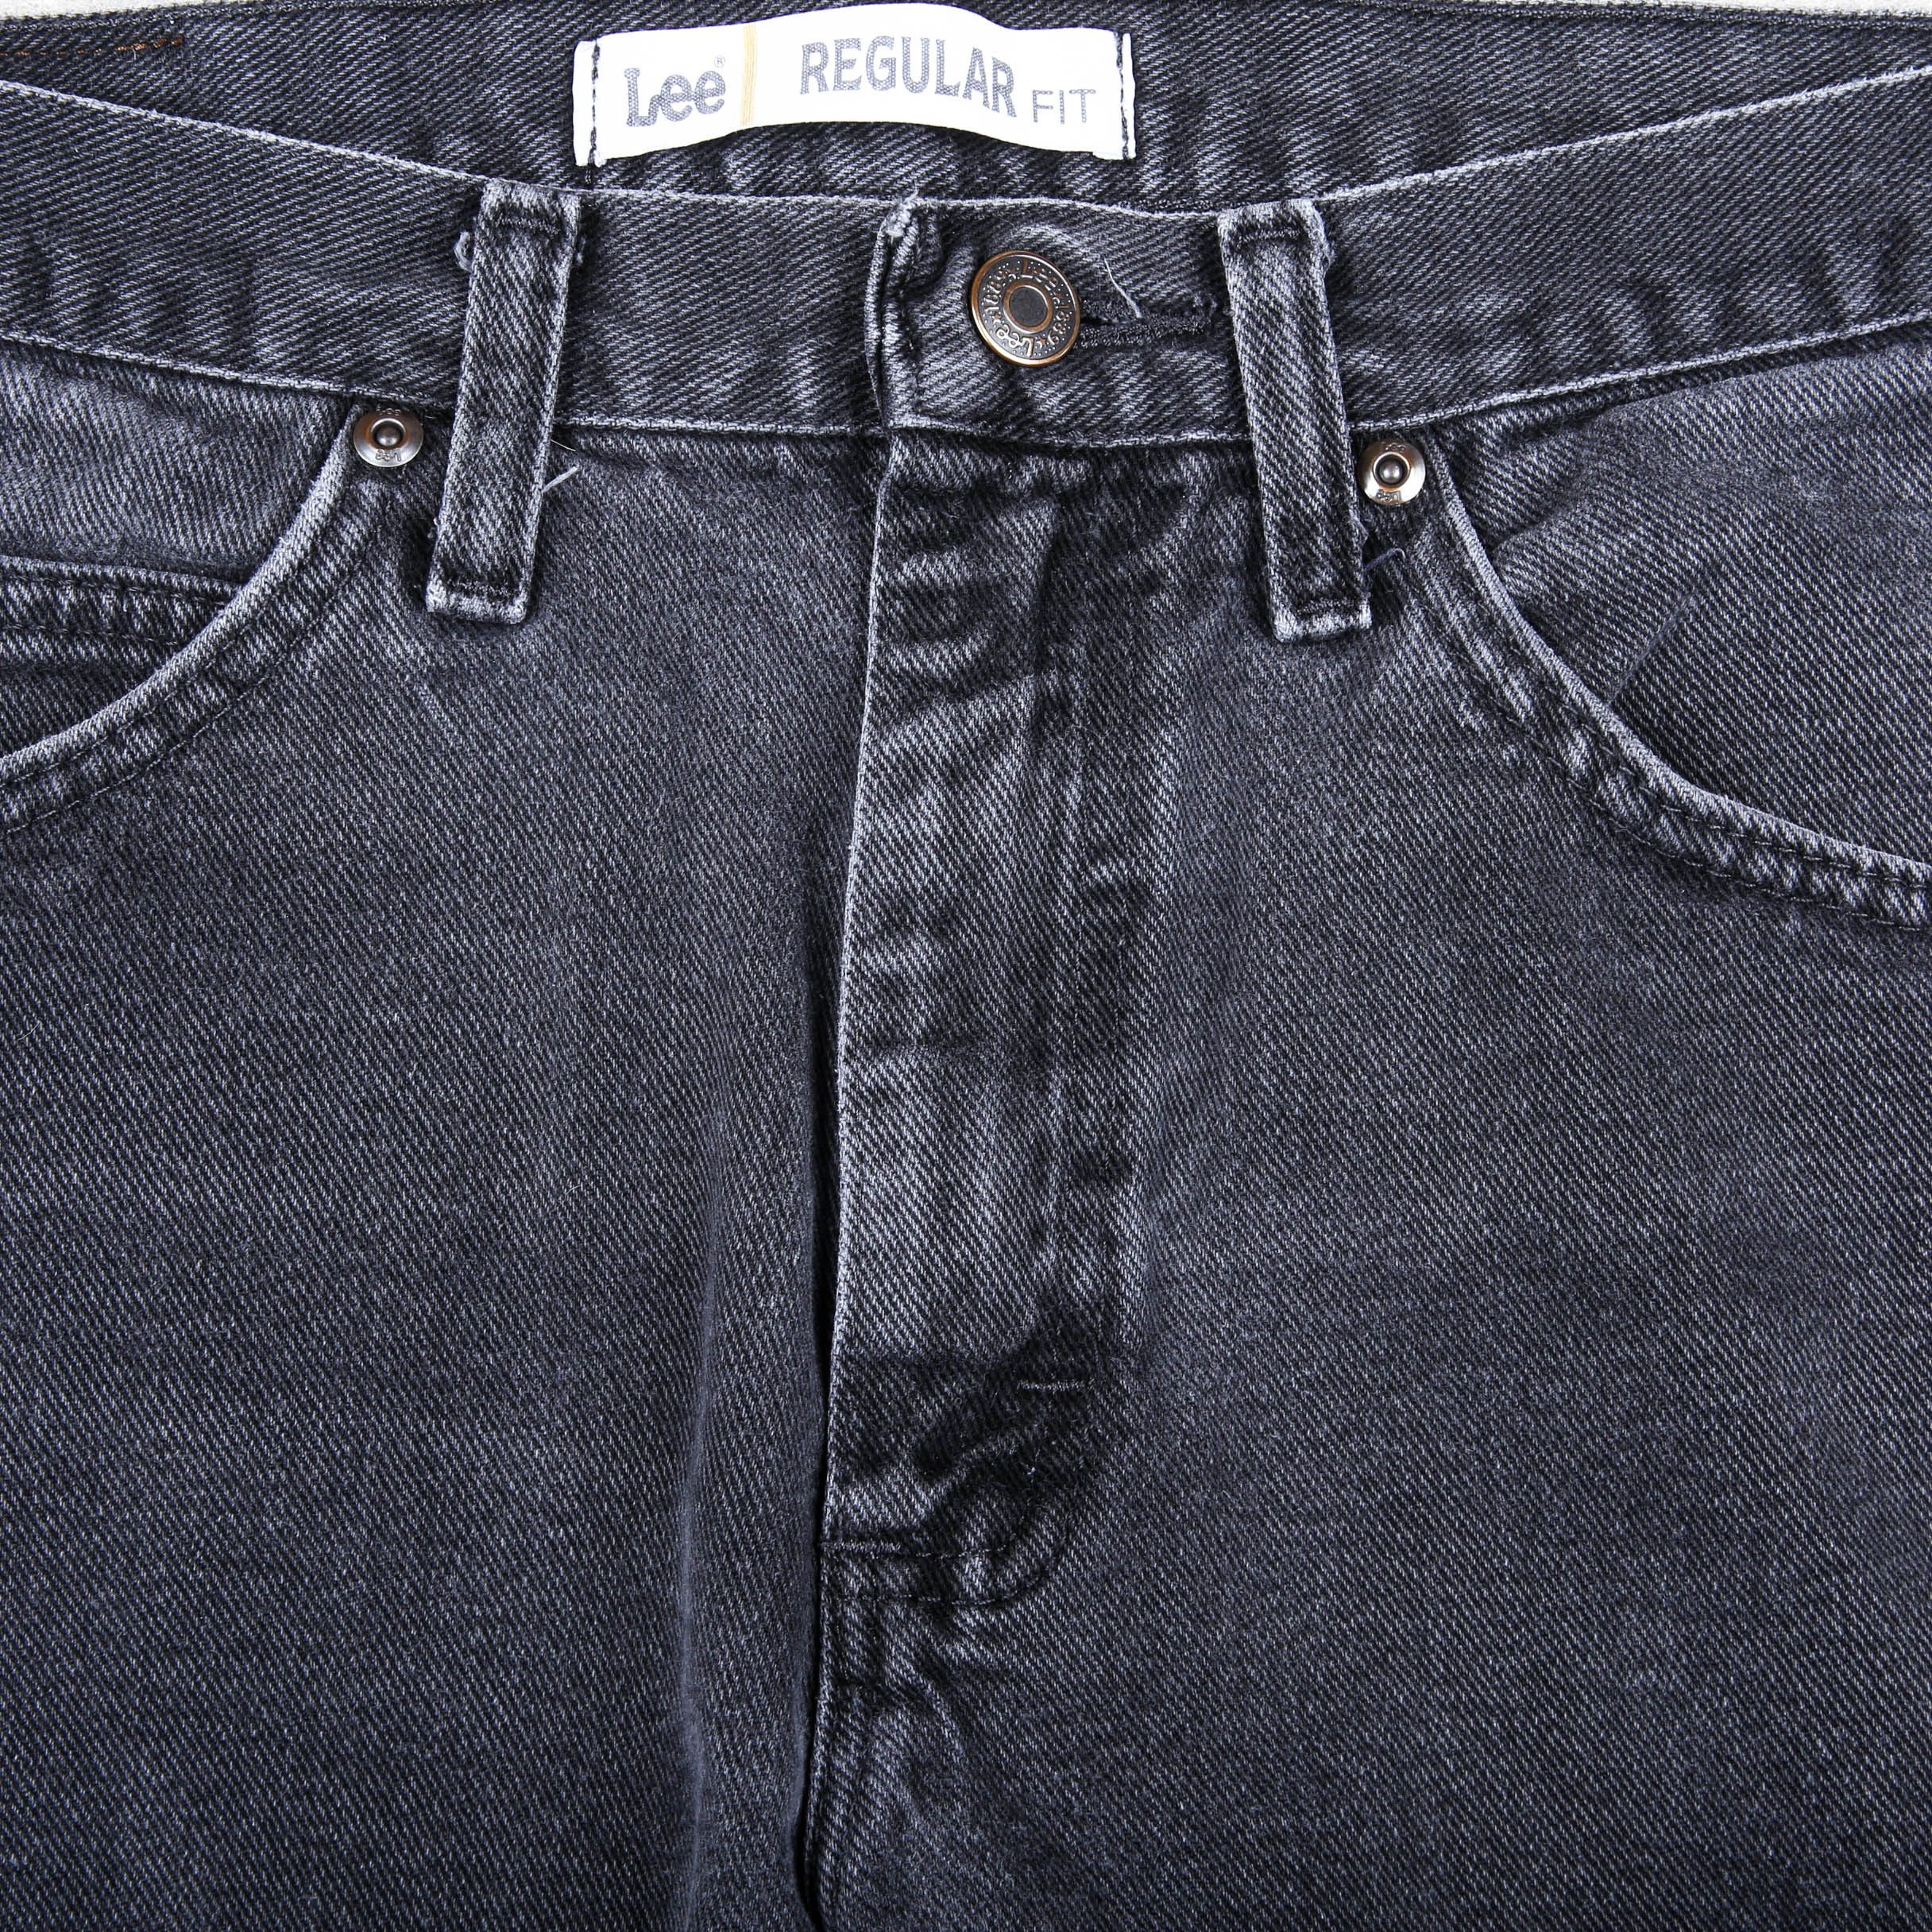 Vintage Vintage Lee's Denim Faded Jeans 33 Late 90s Size US 33 - 4 Thumbnail